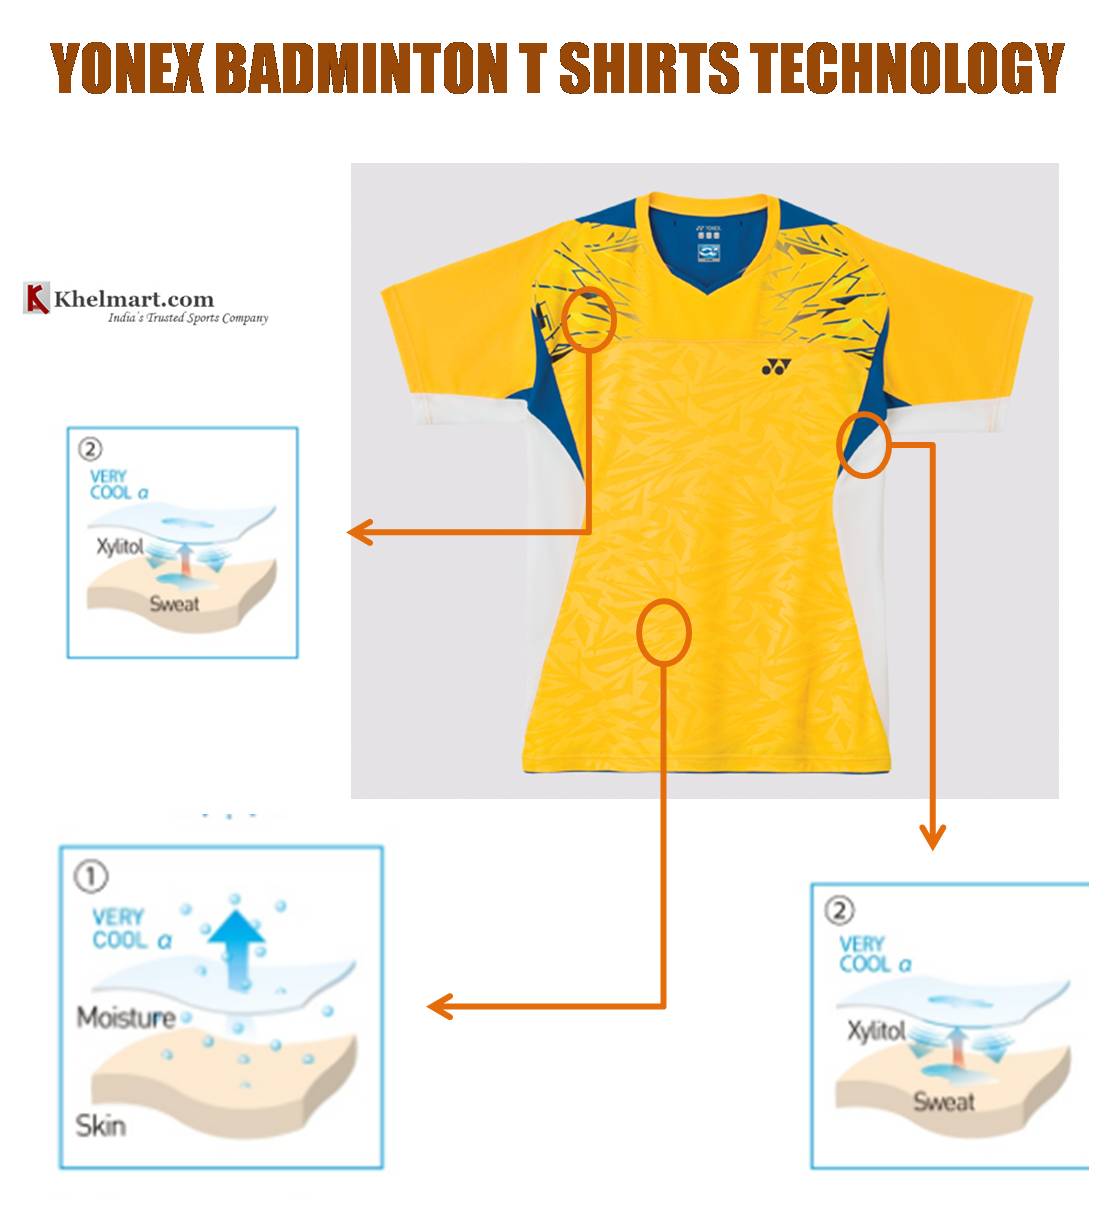 Yonex_Badminton_T_Shirts_Technology01